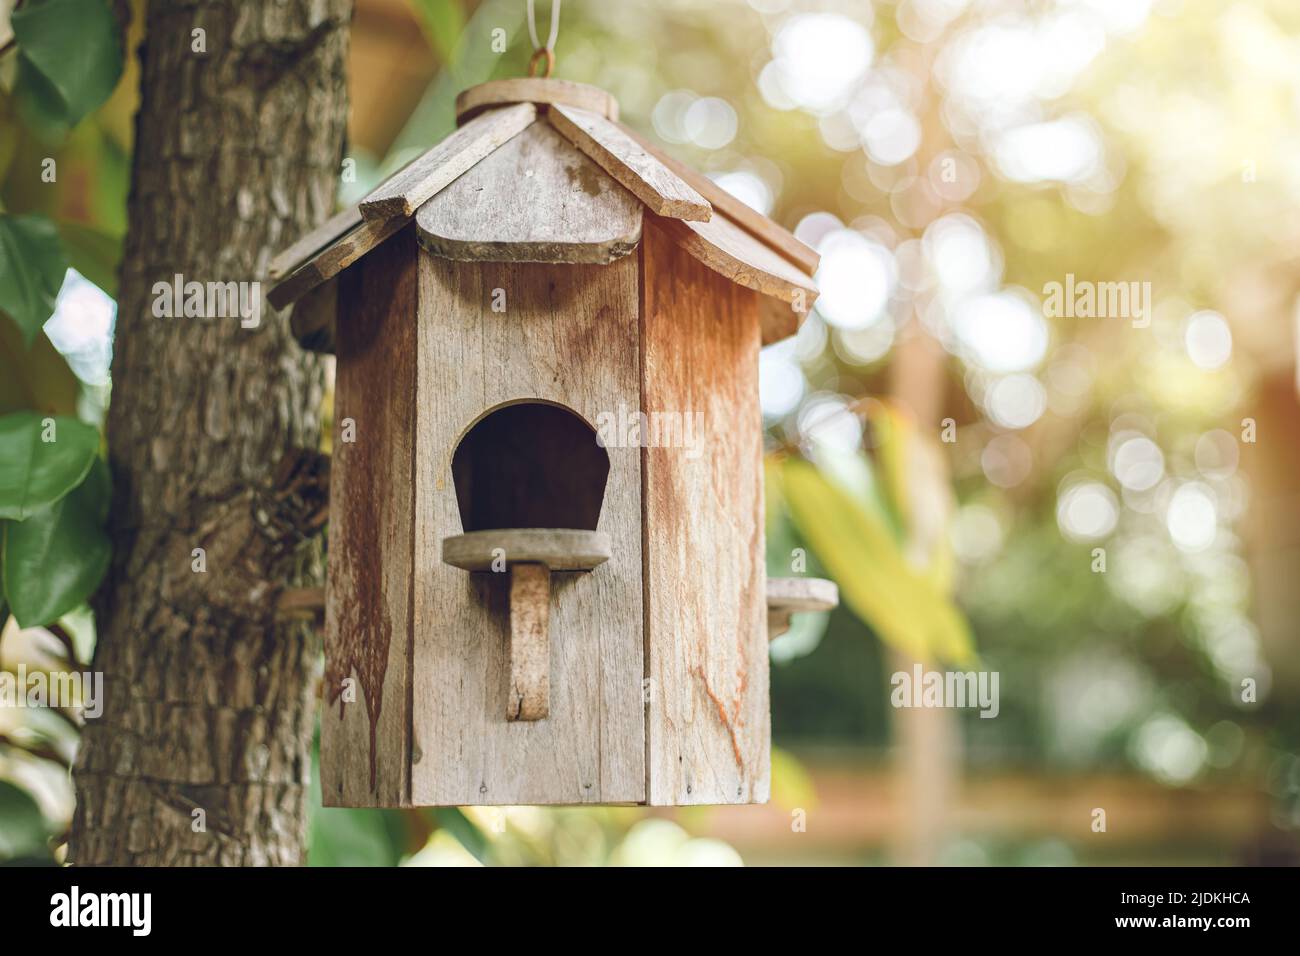 birdhouse. wood bird home house box at tree in the garden Stock Photo